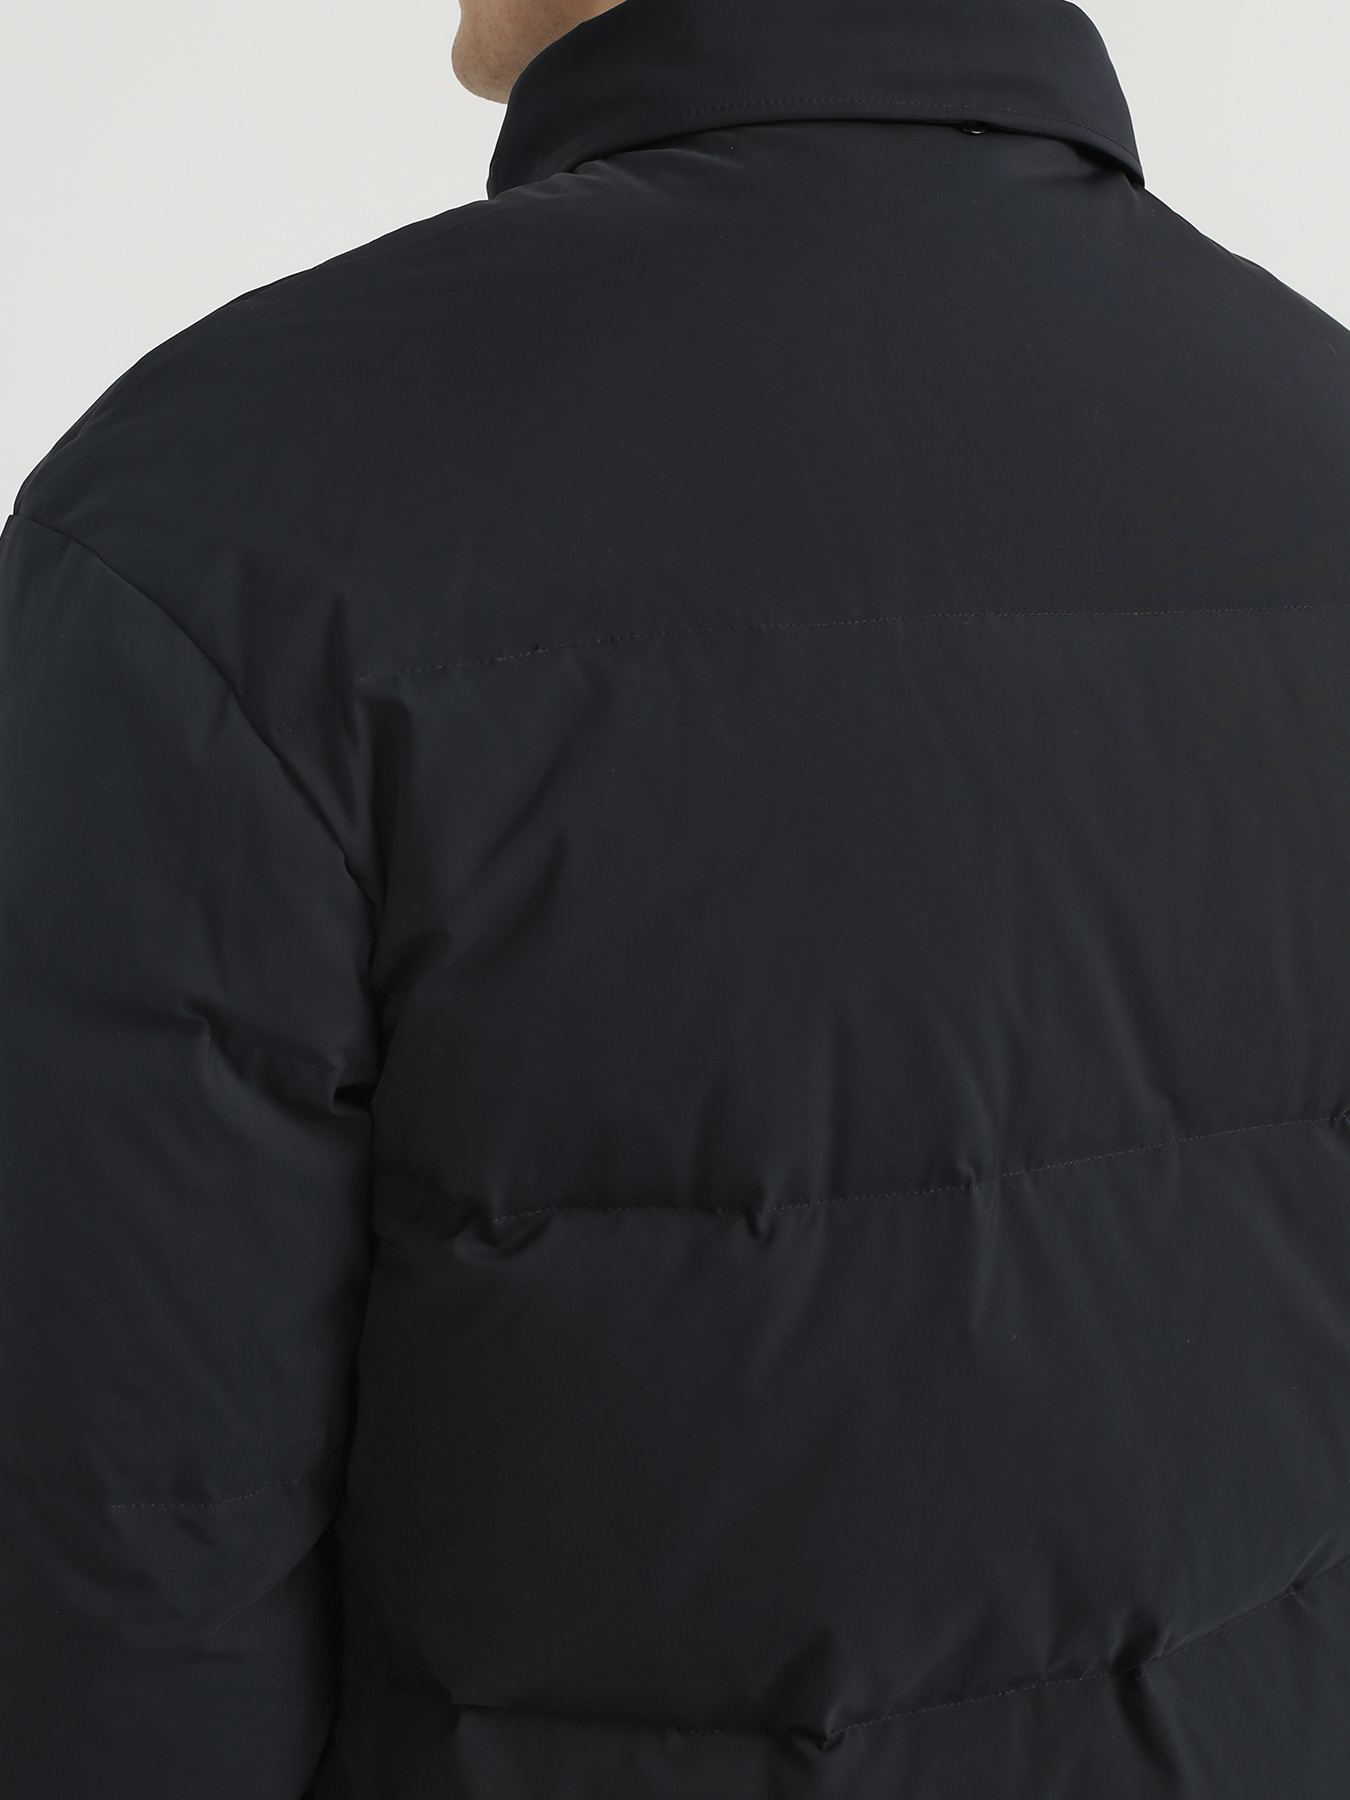 Korpo Two Куртка со съемным воротником 329050-026 Фото 5